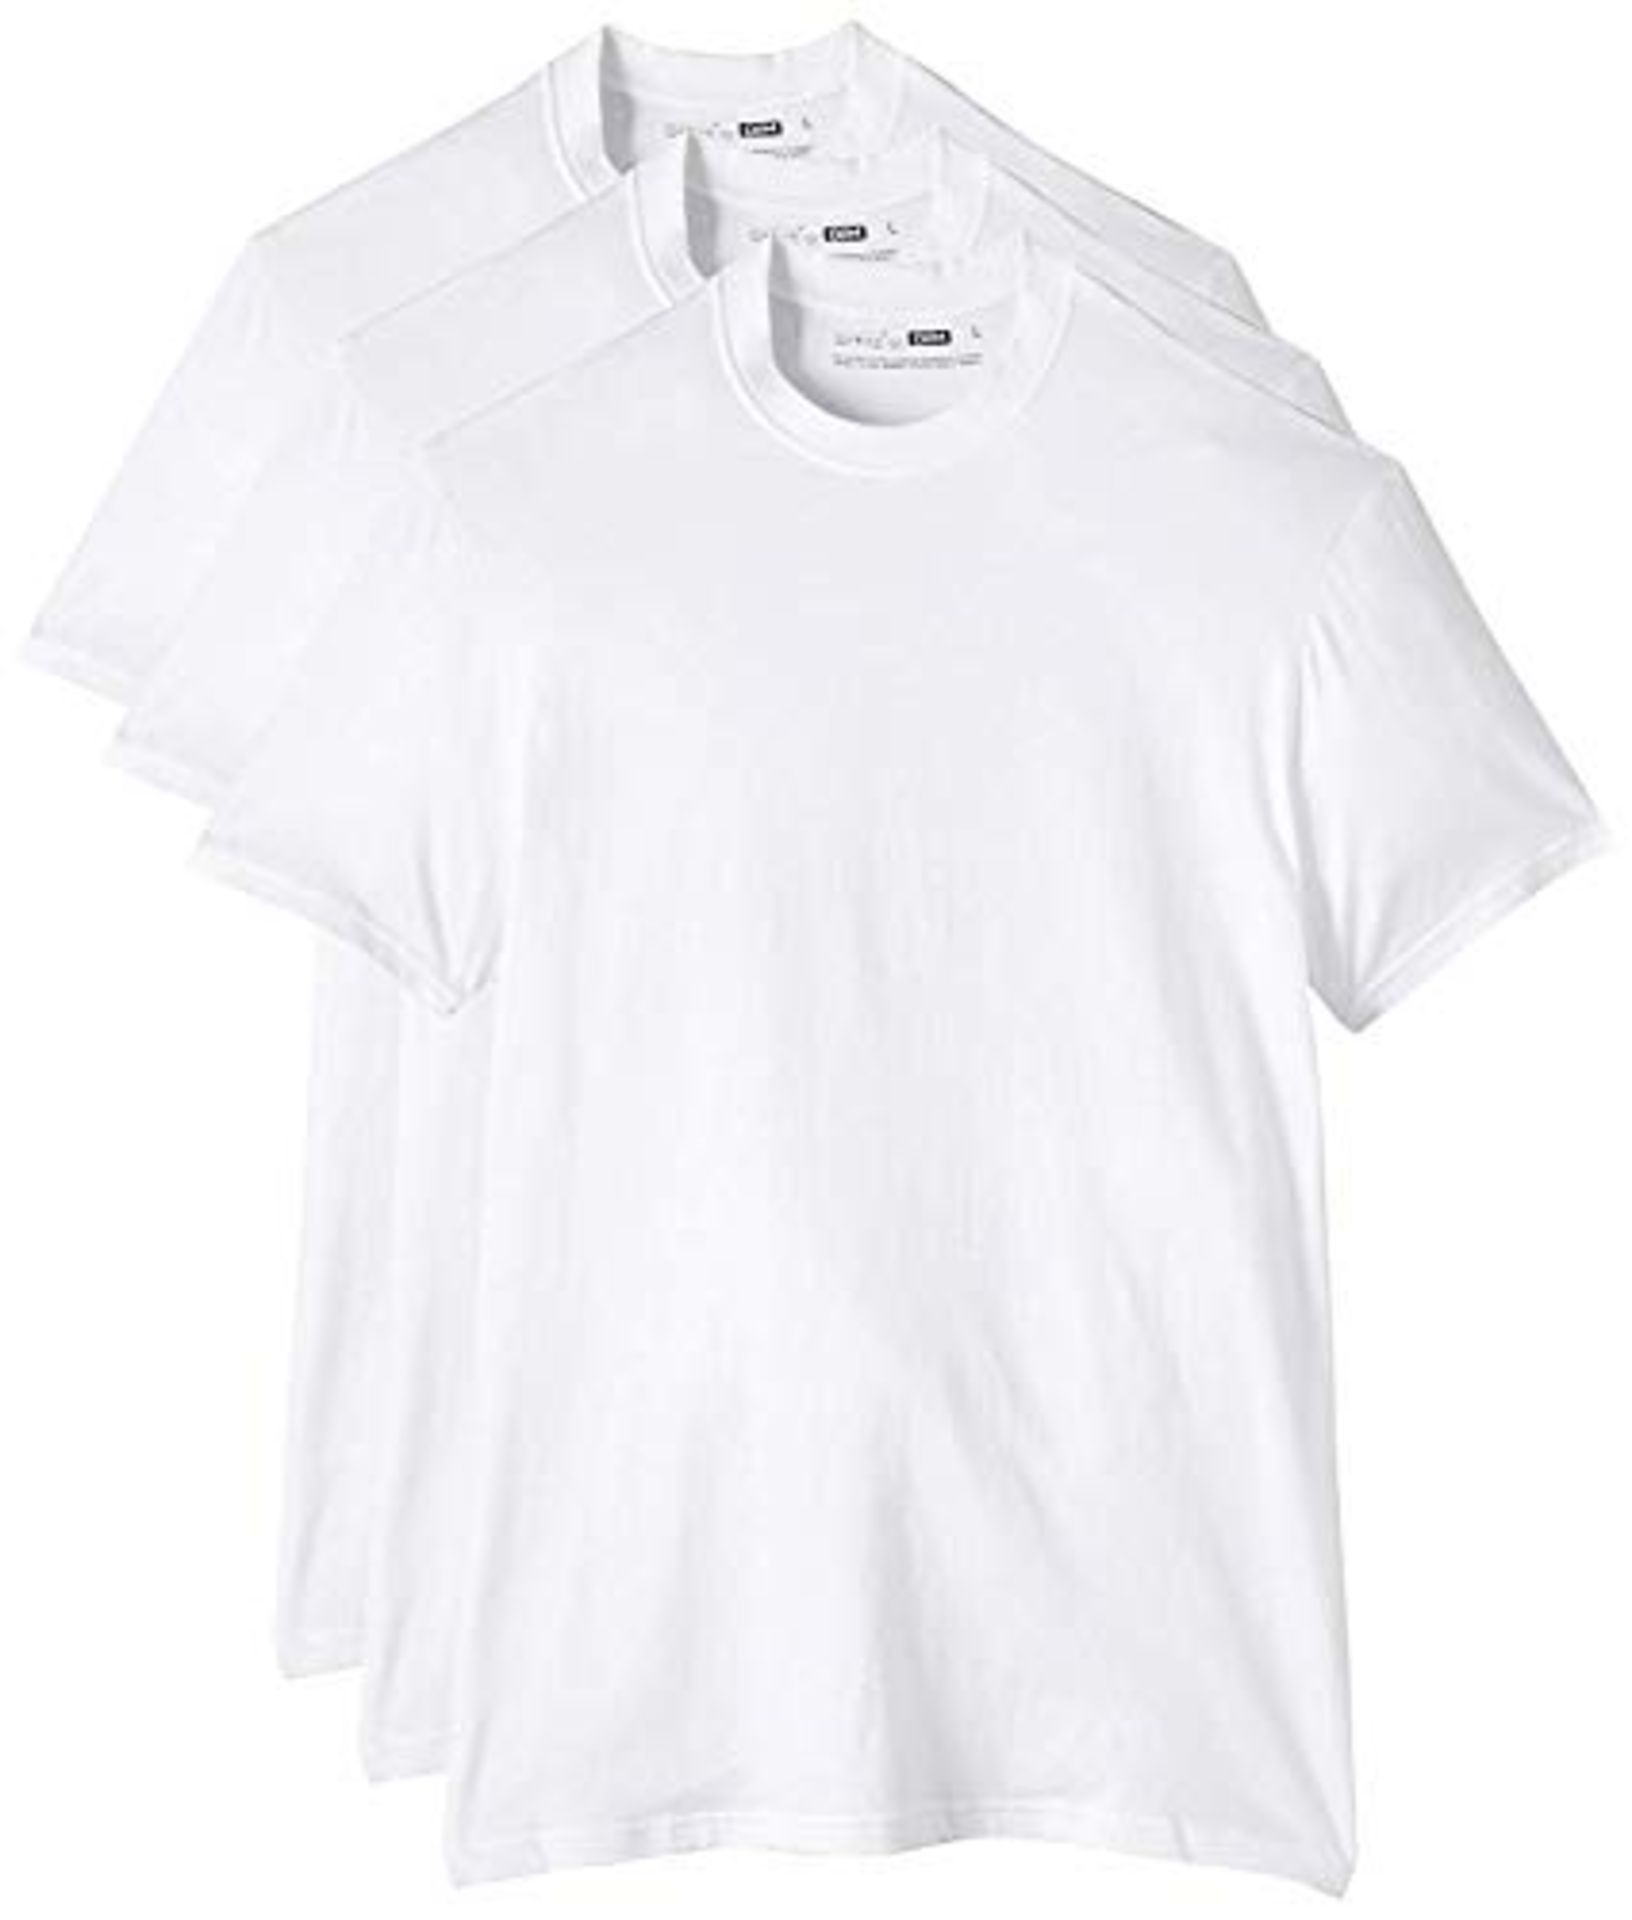 Round Neck Ecodim 100% Cotton Men's T-shirt x3, White, L